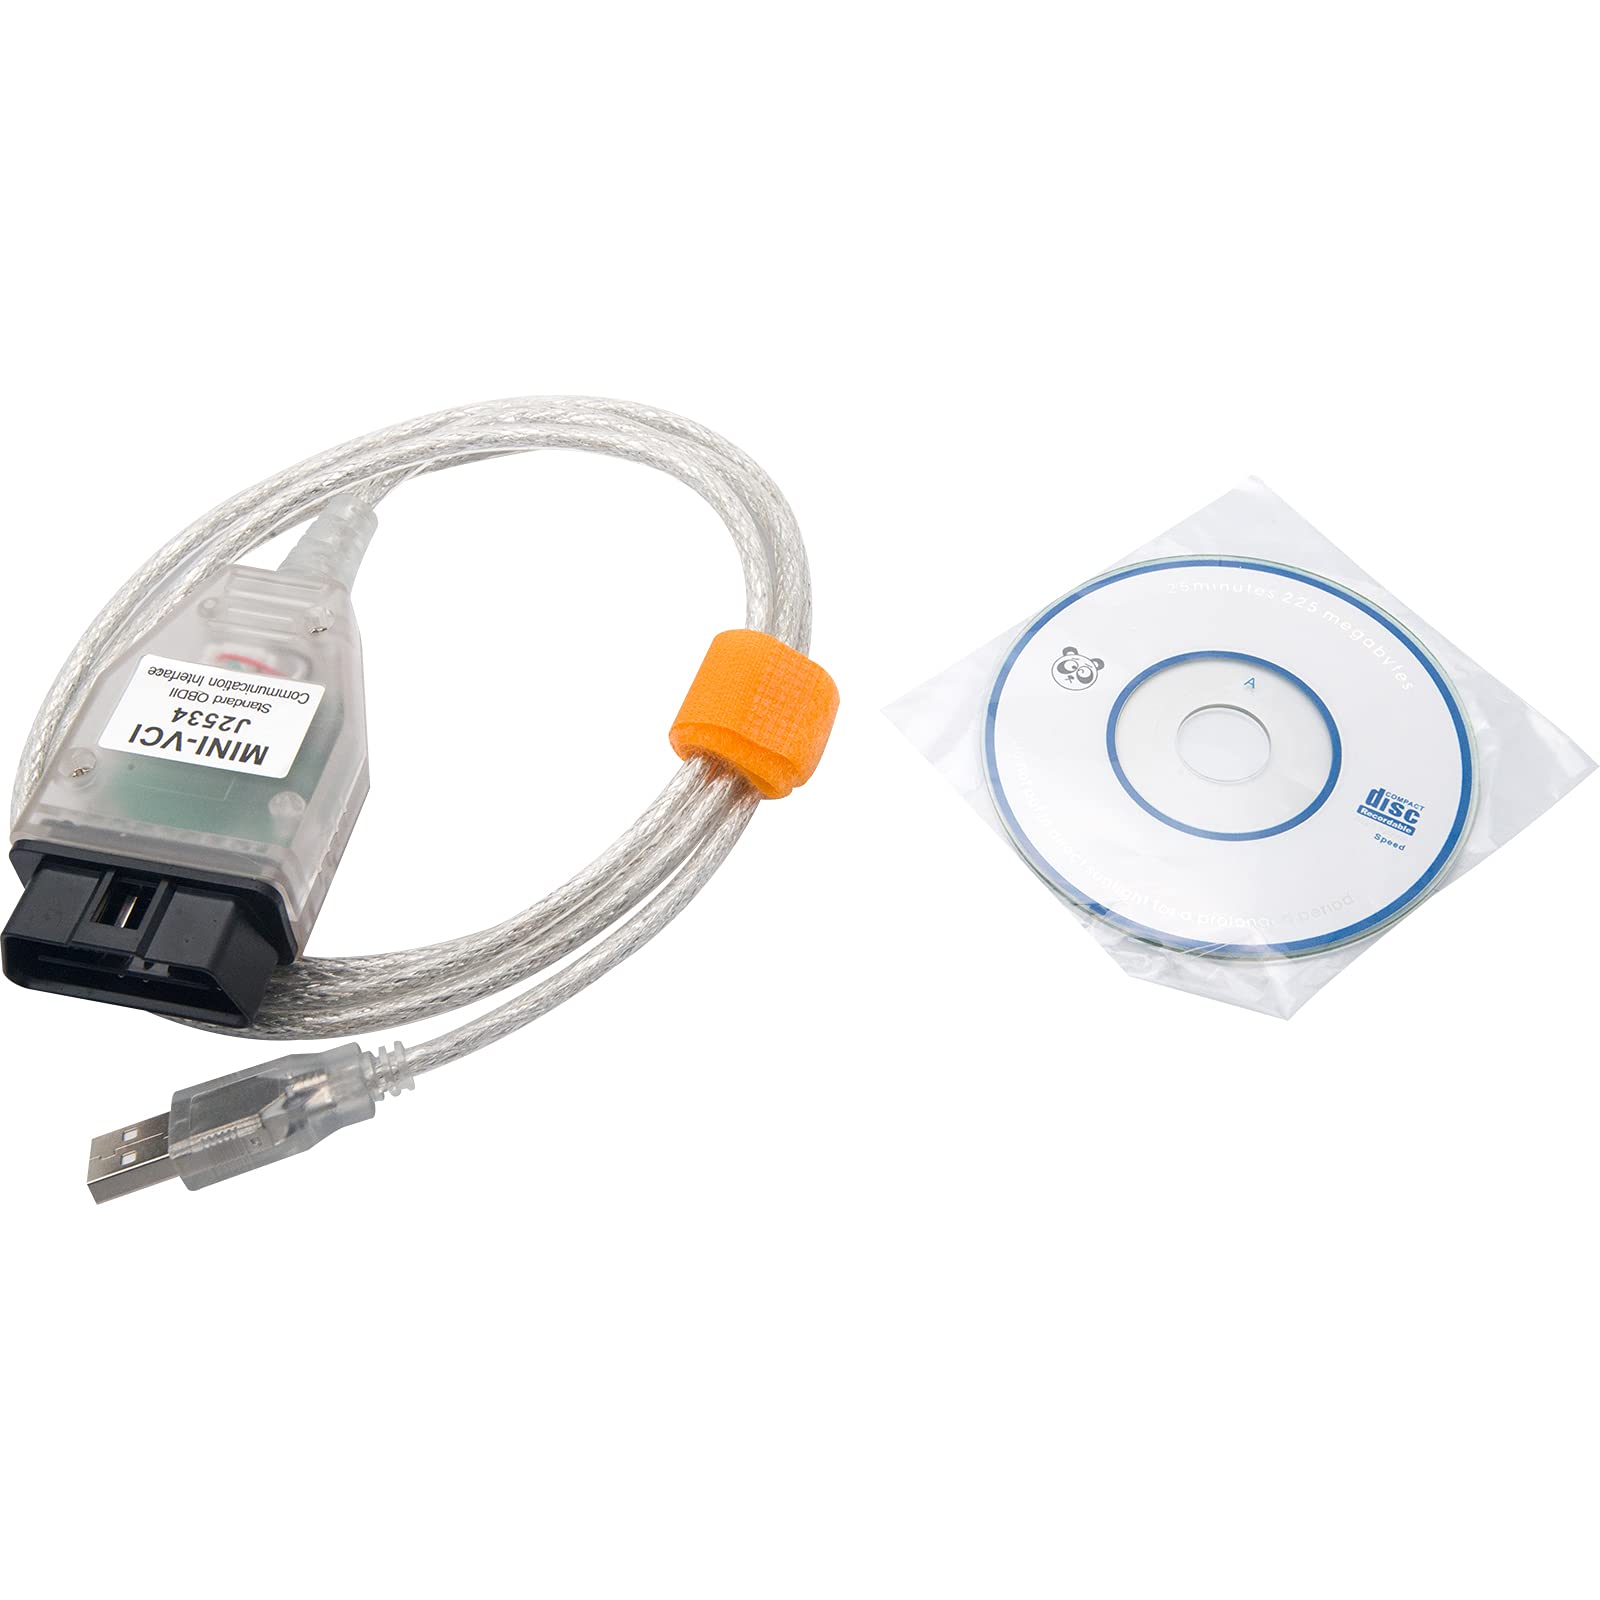 Riloer OBD2 Diagnose-Scan-Tool, 1,5 m Mini-Kabel-Diagnose-Werkzeugkabel-Kabel-Scanner Mini VCI 16PIN-Schnittstellenkabel für T0Y0TA TIS L-EXUS T-Echstream von Riloer